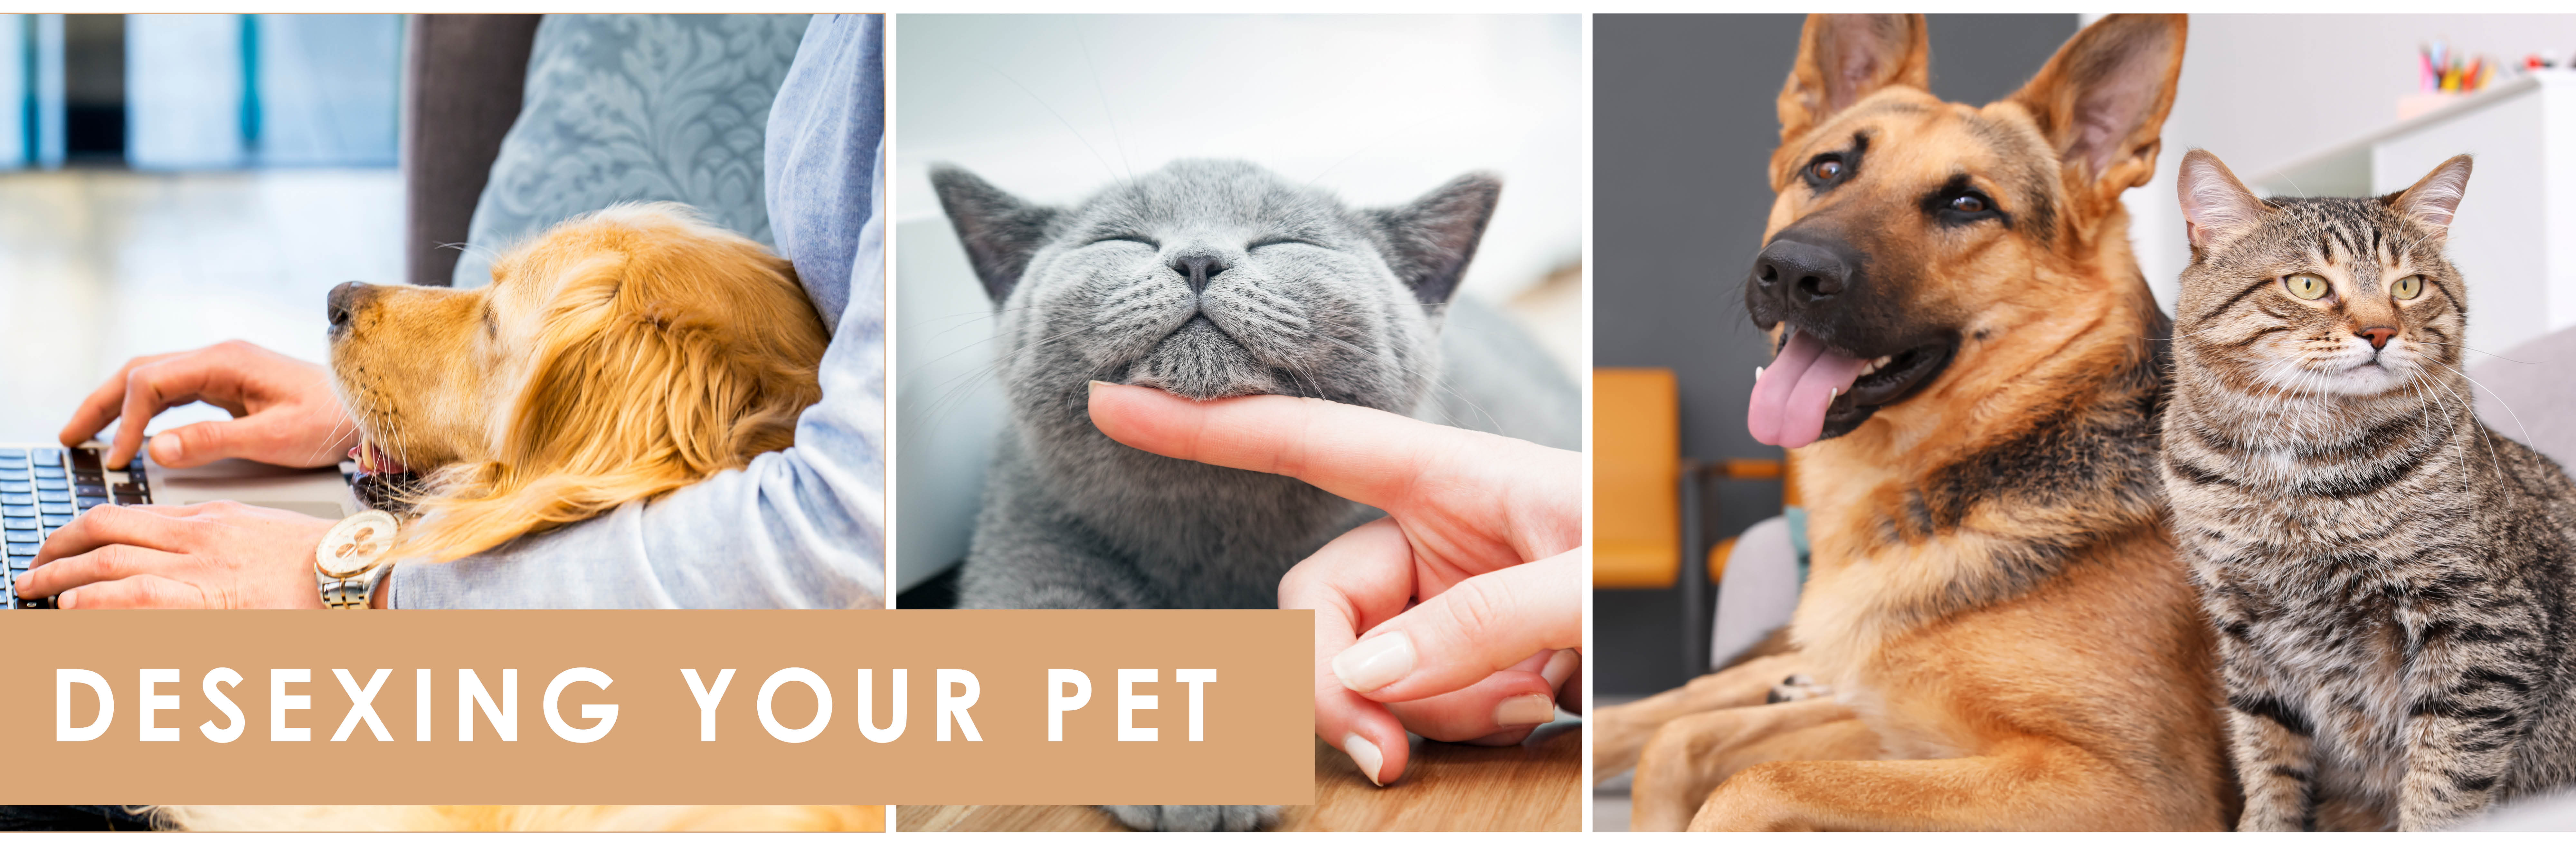 Desexing your pet banner.jpg